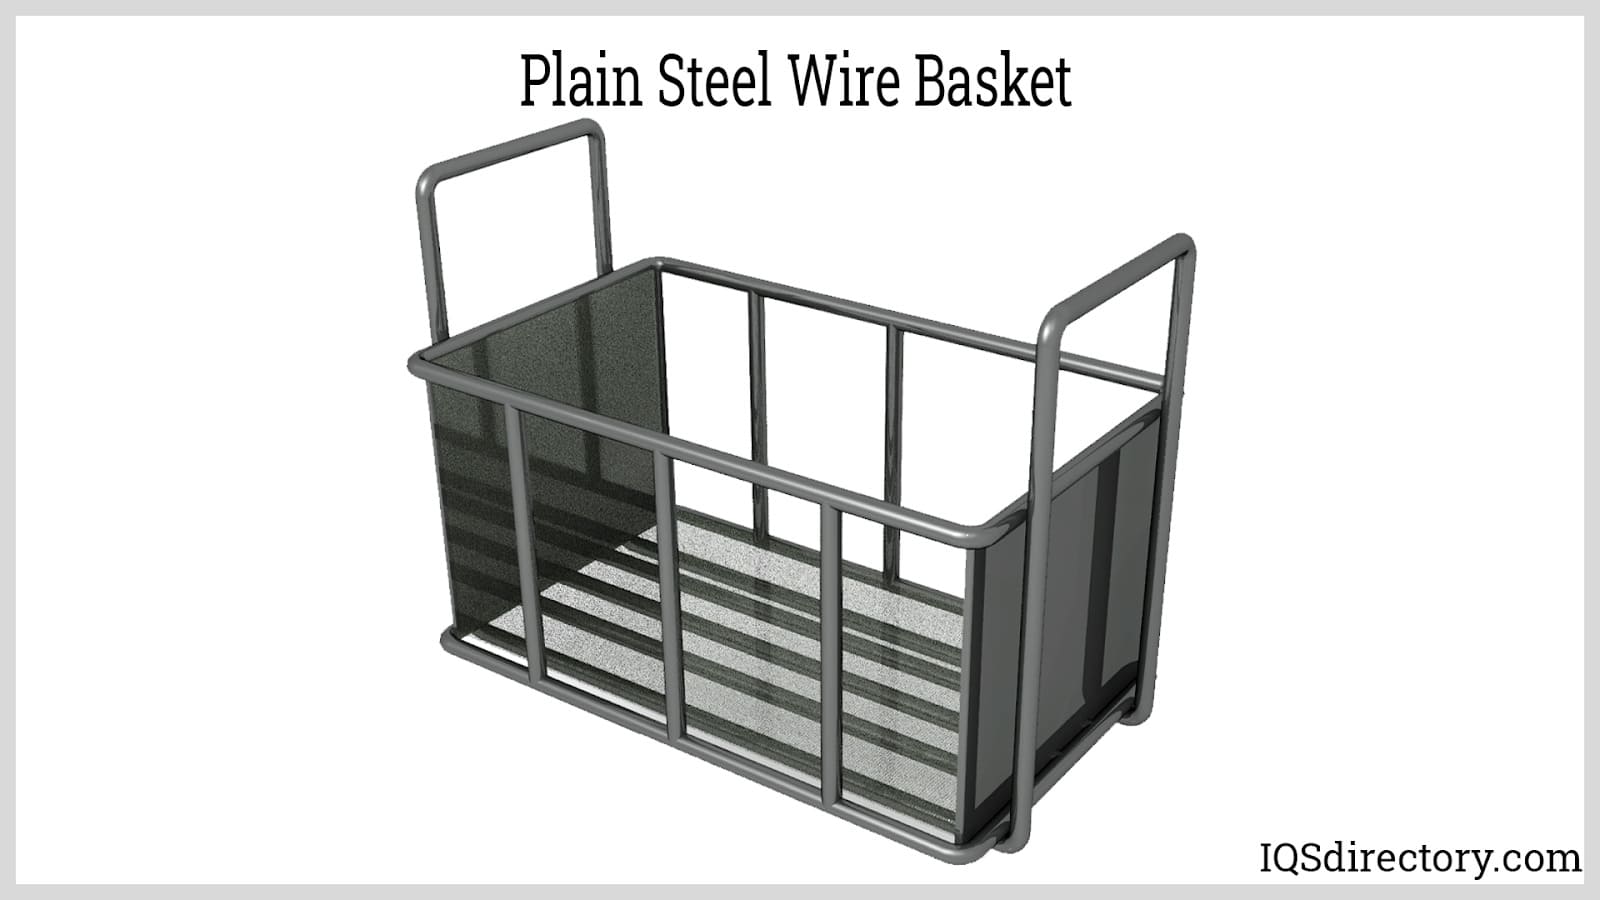 https://www.iqsdirectory.com/articles/wire-form/wire-baskets/plain-steel-wire-basket.jpg